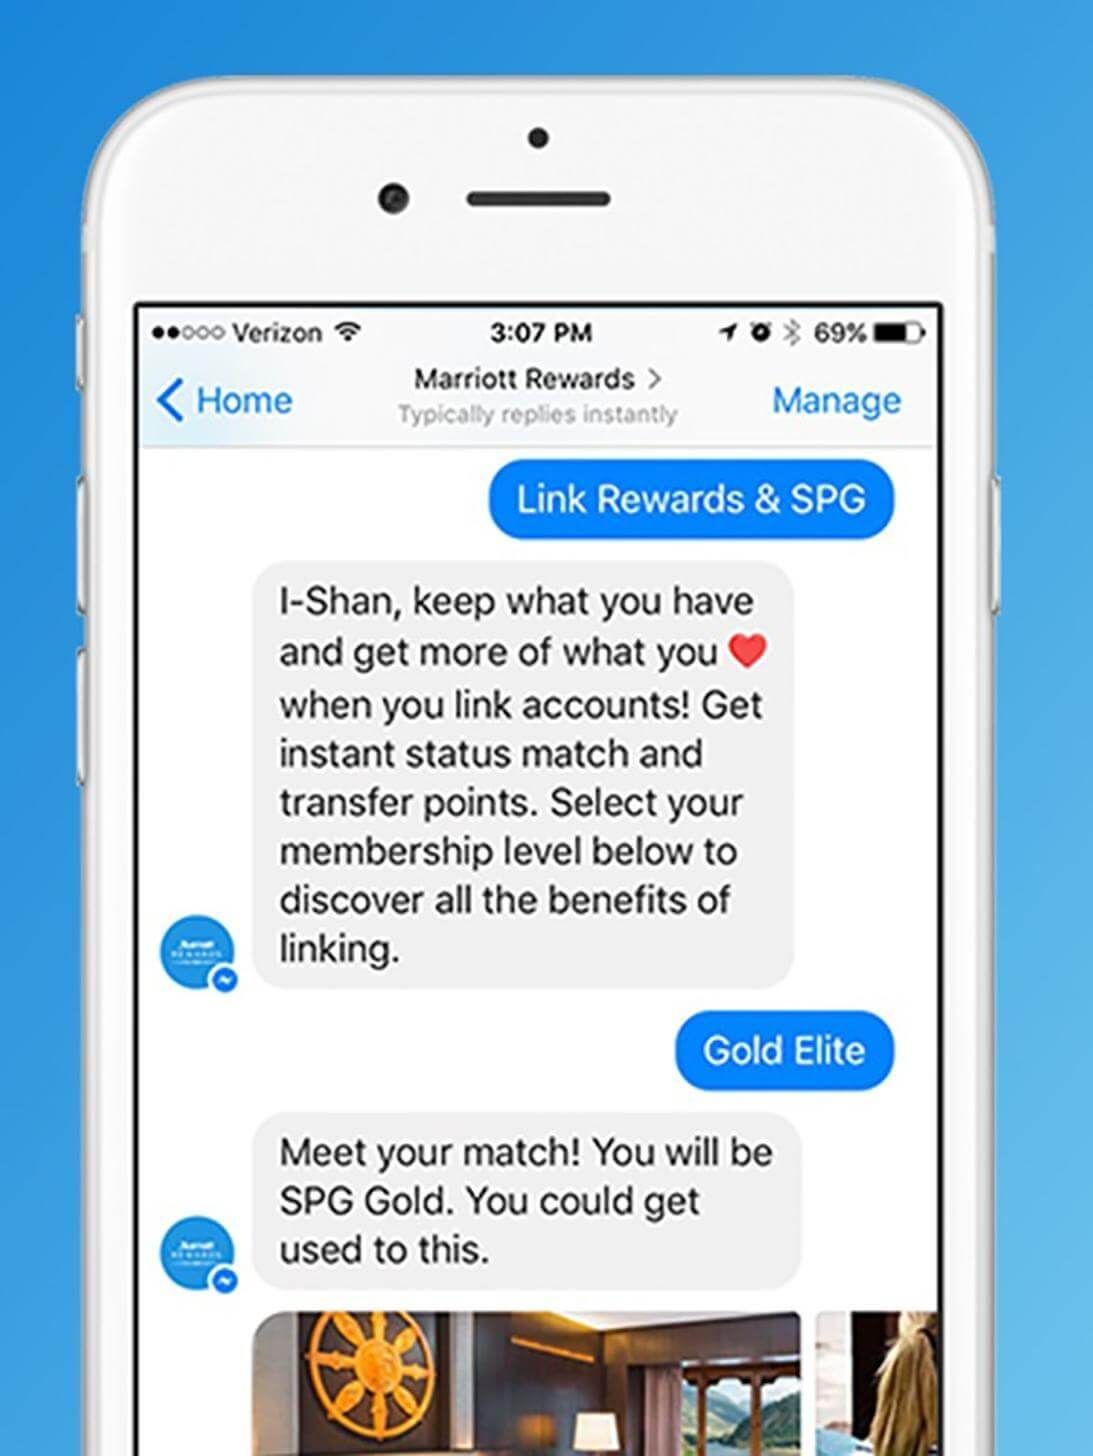 Marriot’s Facebook chatbot